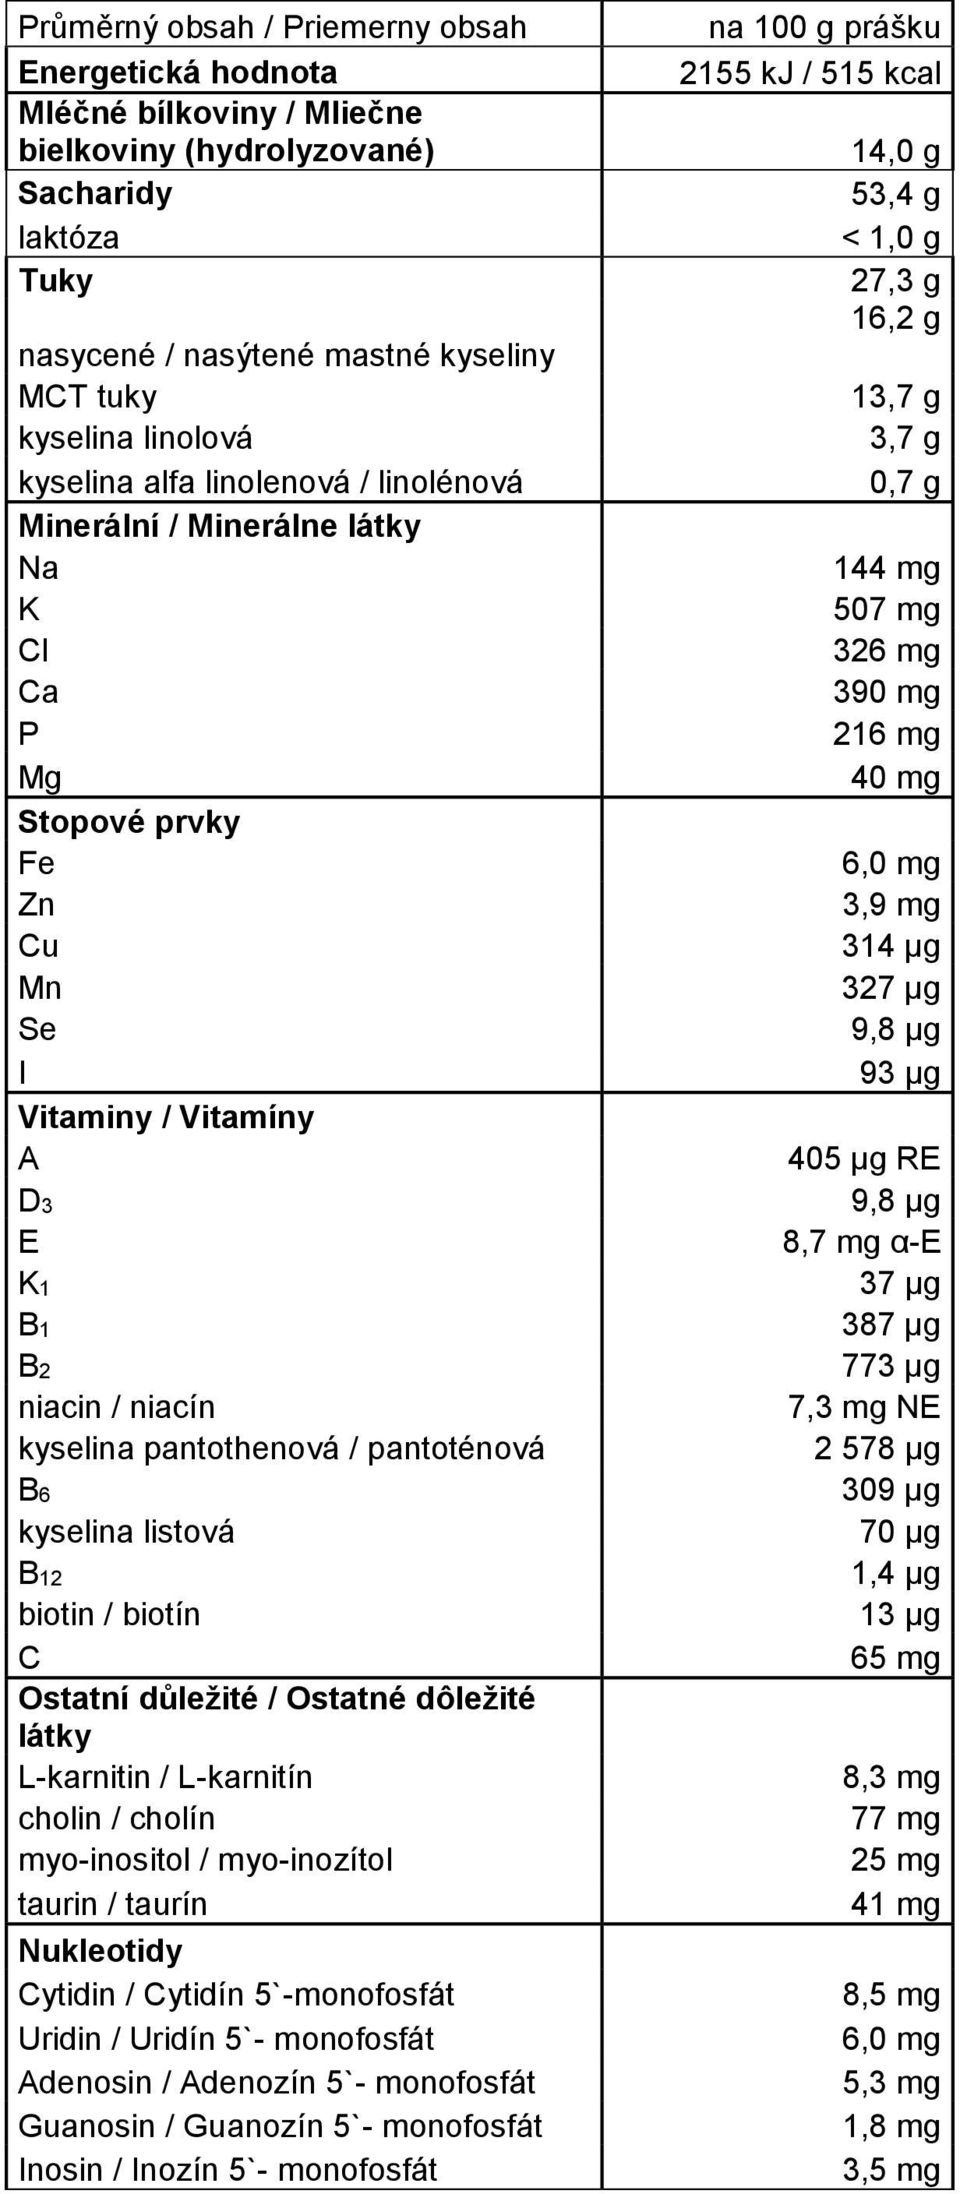 Mg 40 mg Stopové prvky Fe 6,0 mg Zn 3,9 mg Cu 314 μg Mn 327 μg Se 9,8 μg I 93 μg Vitaminy / Vitamíny A 405 μg RE D3 9,8 μg E 8,7 mg α-e K1 37 μg B1 387 µg B2 773 μg niacin / niacín 7,3 mg NE kyselina